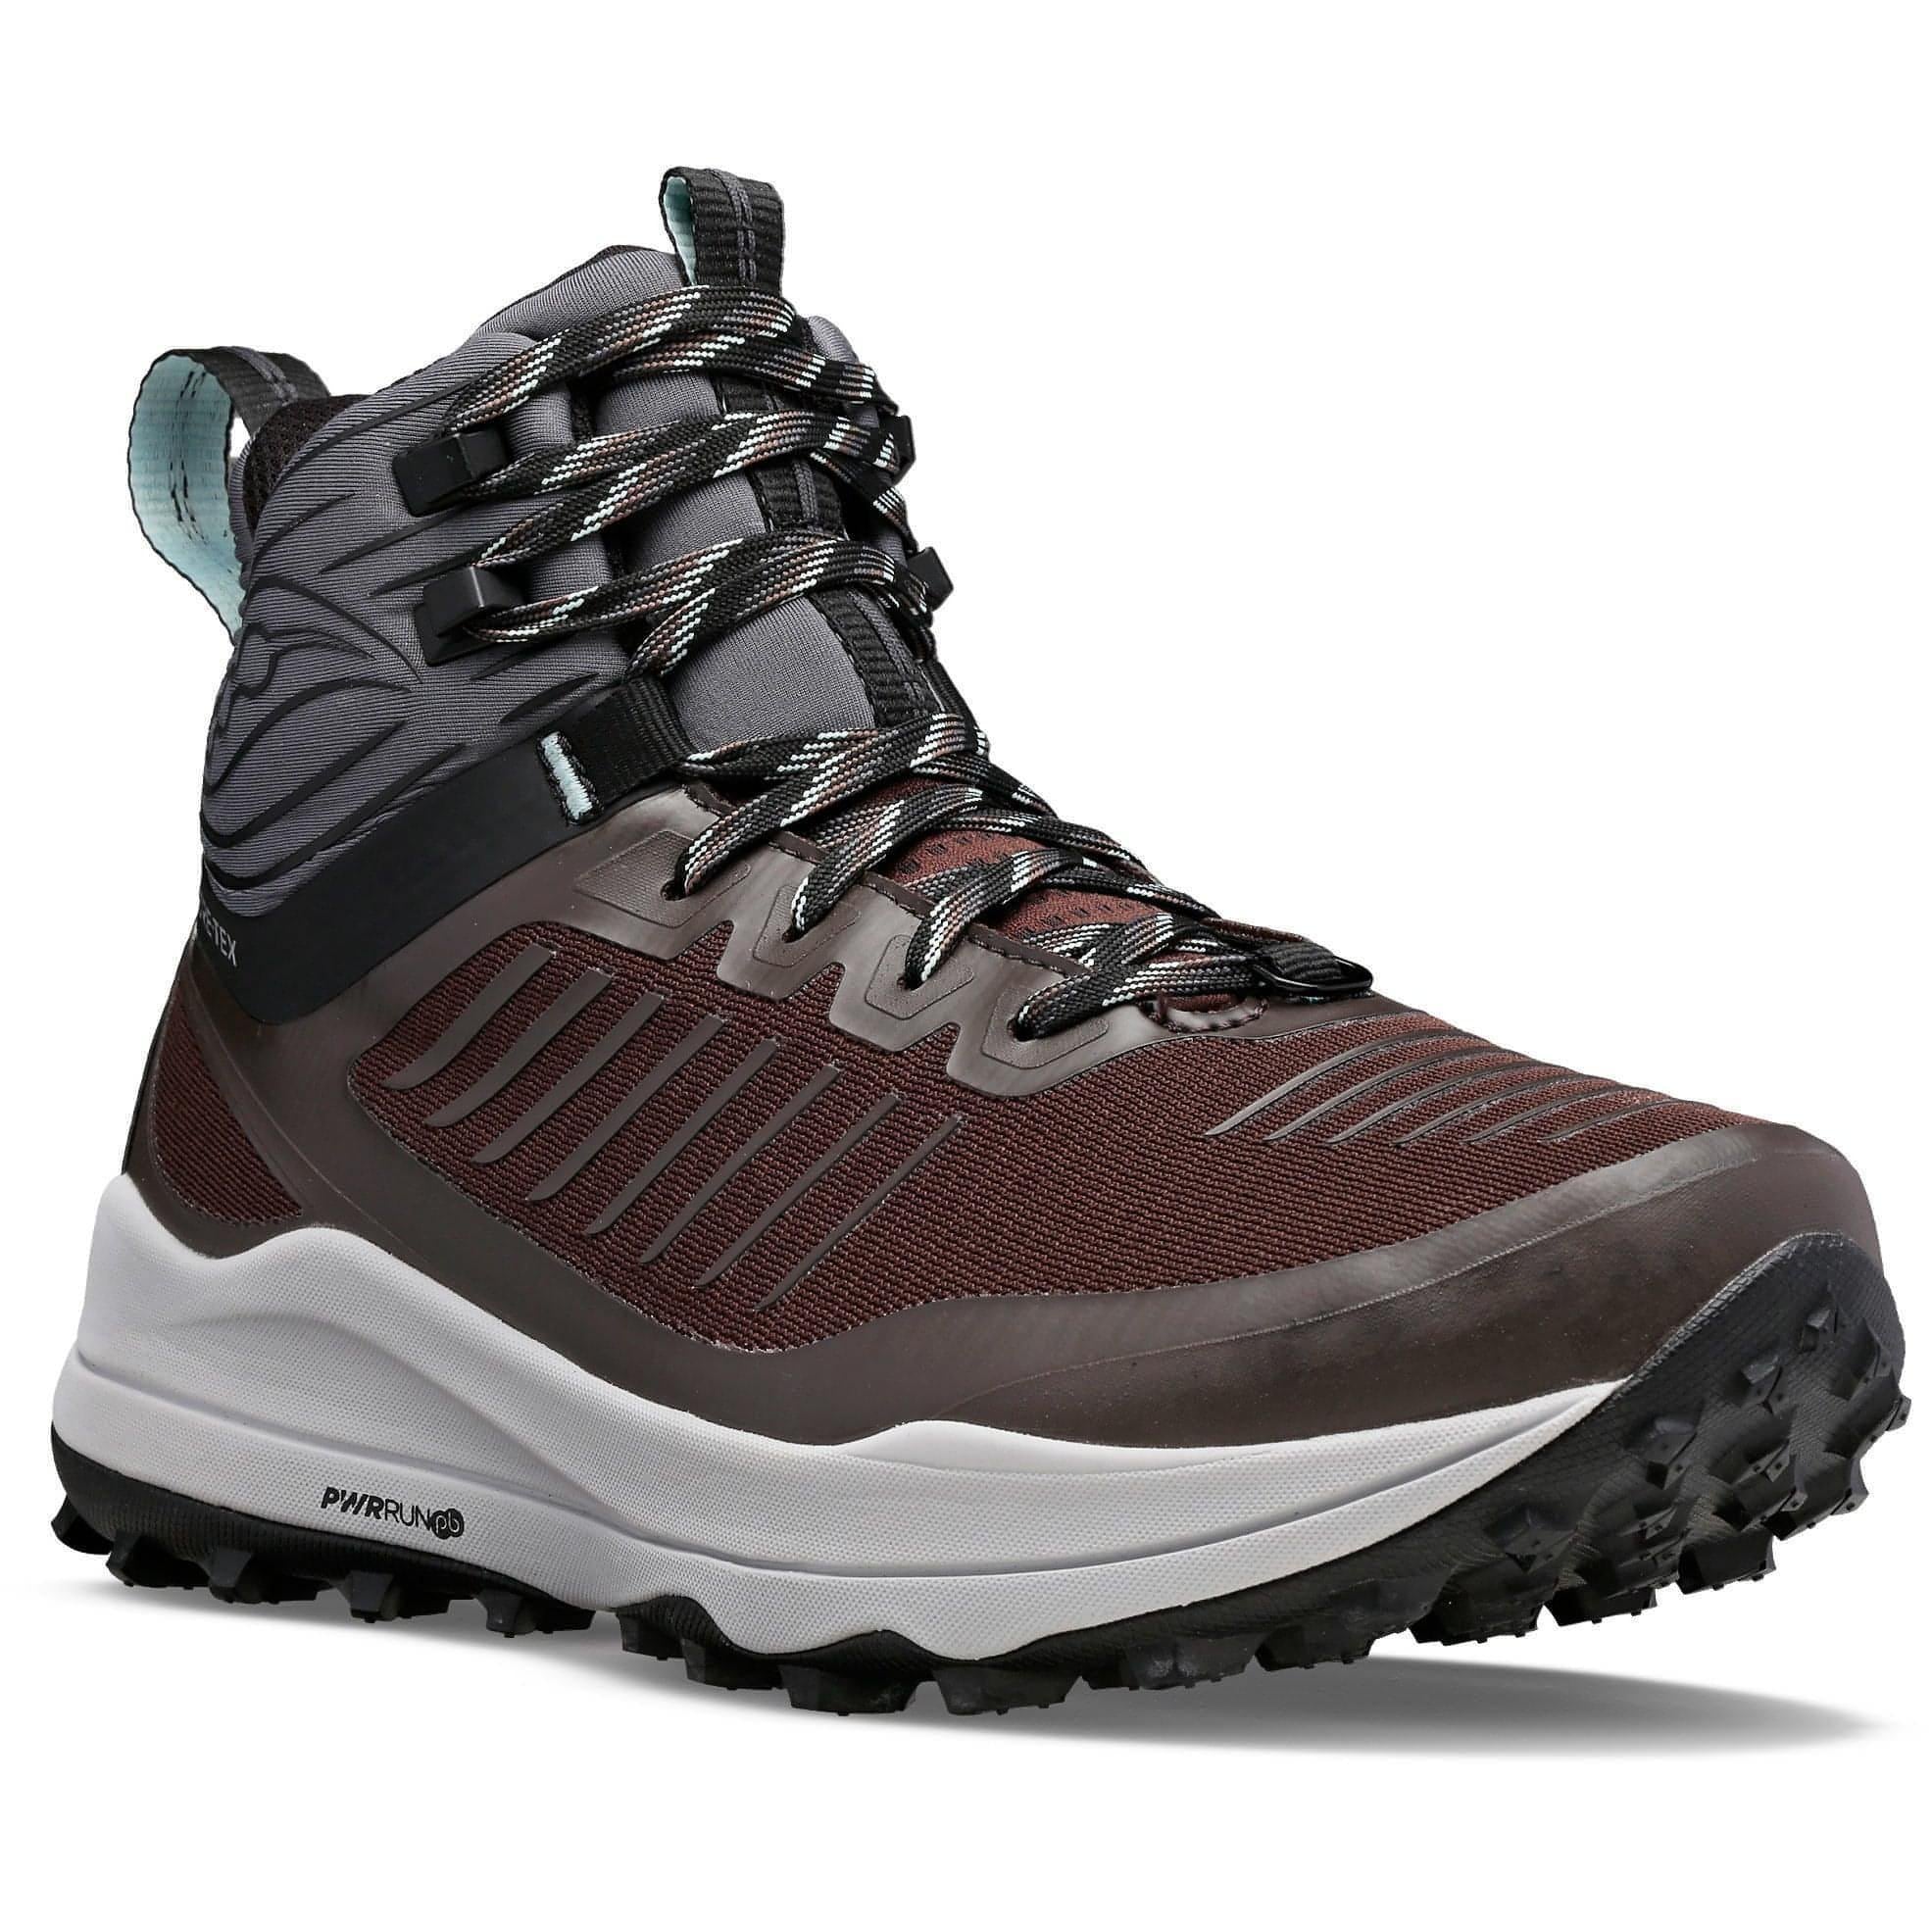 Saucony Ultra Ridge GTX Mens Walking Boots - Brown